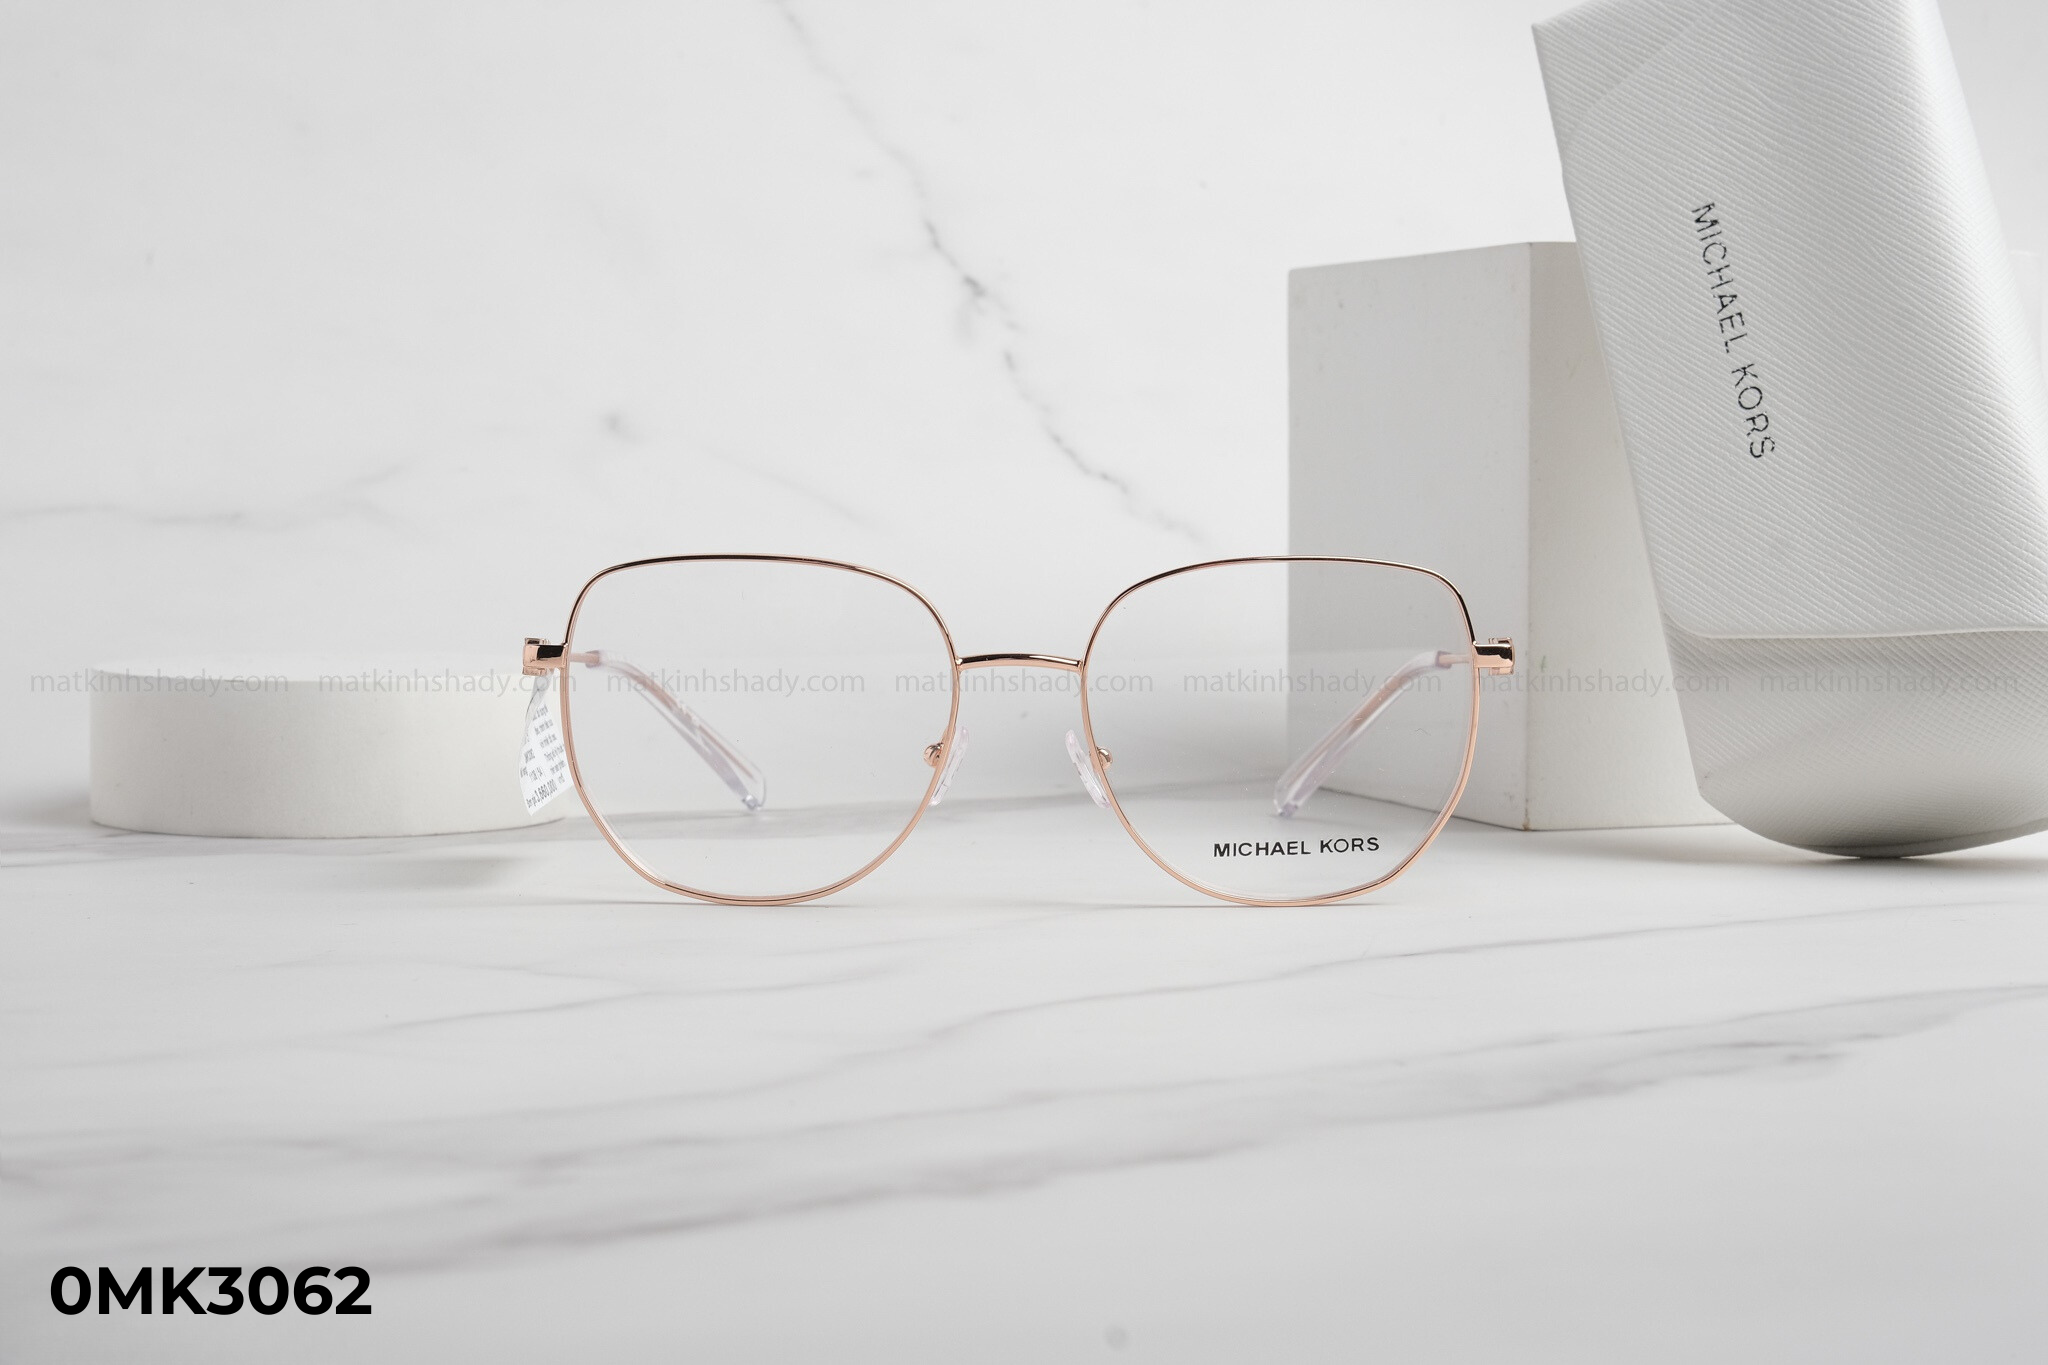  Michael Kors Eyewear - Glasses - 0MK3062 